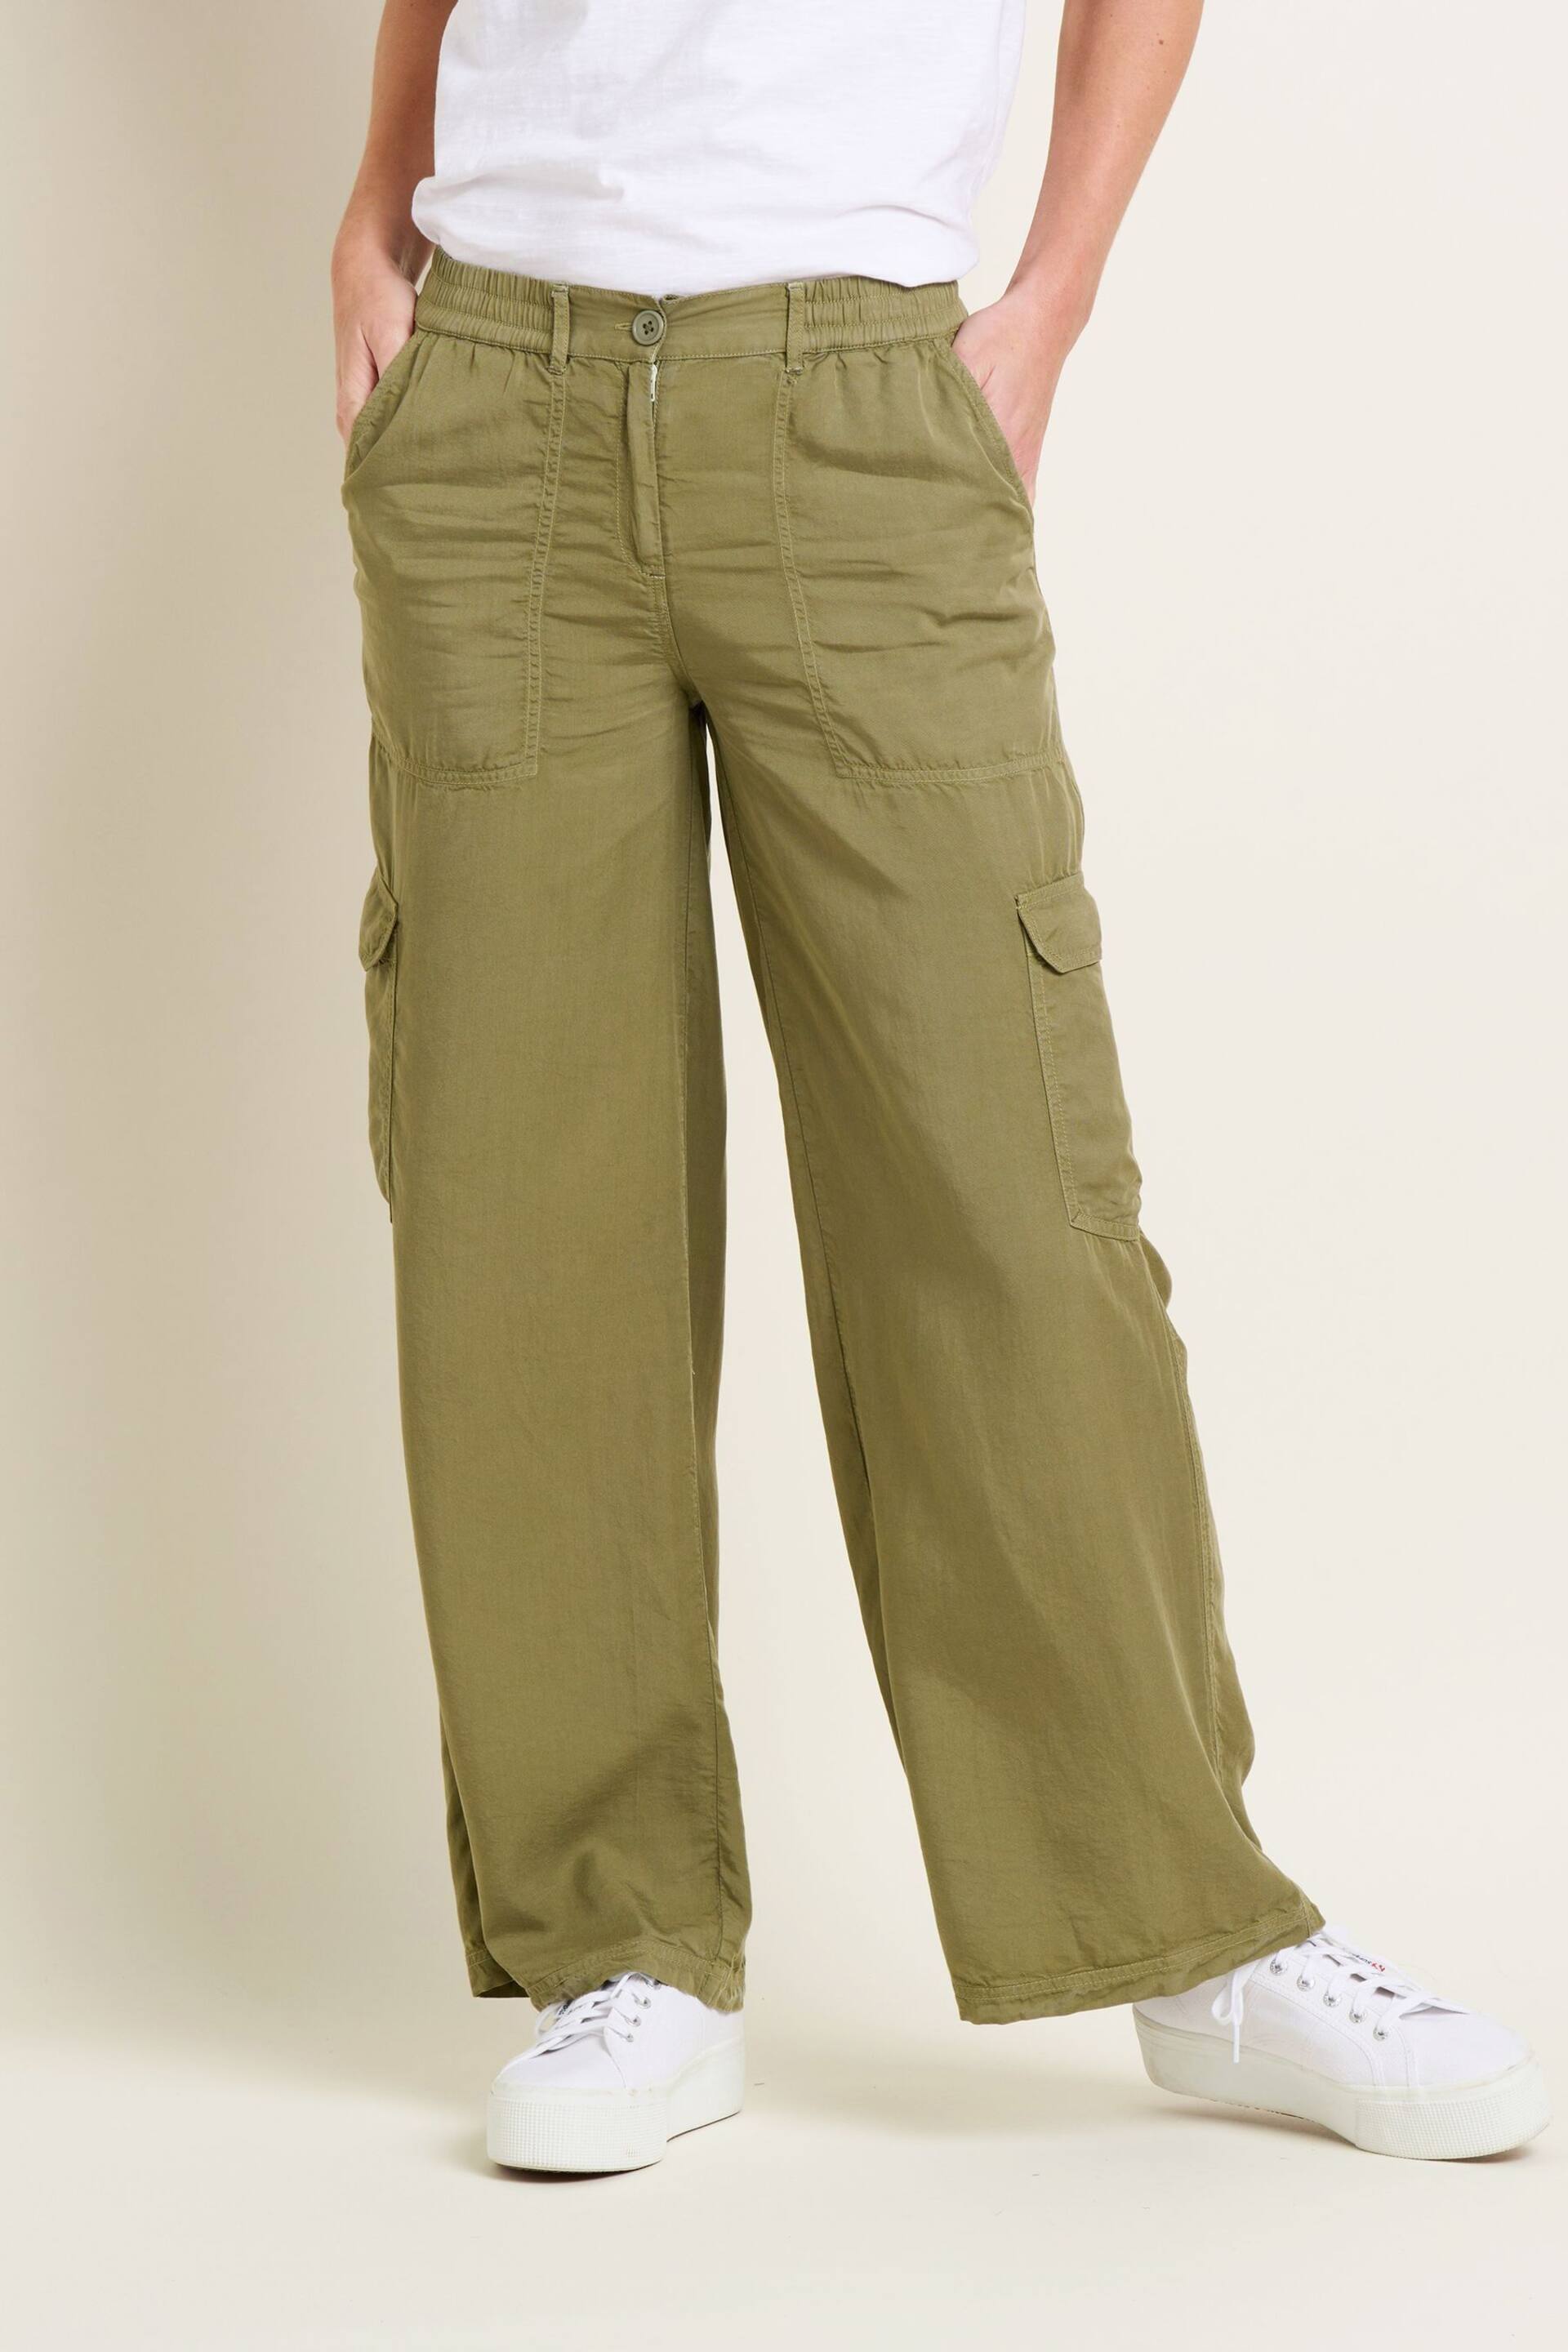 Brakeburn Green Wide Leg Side Pocket Trousers - Image 1 of 4